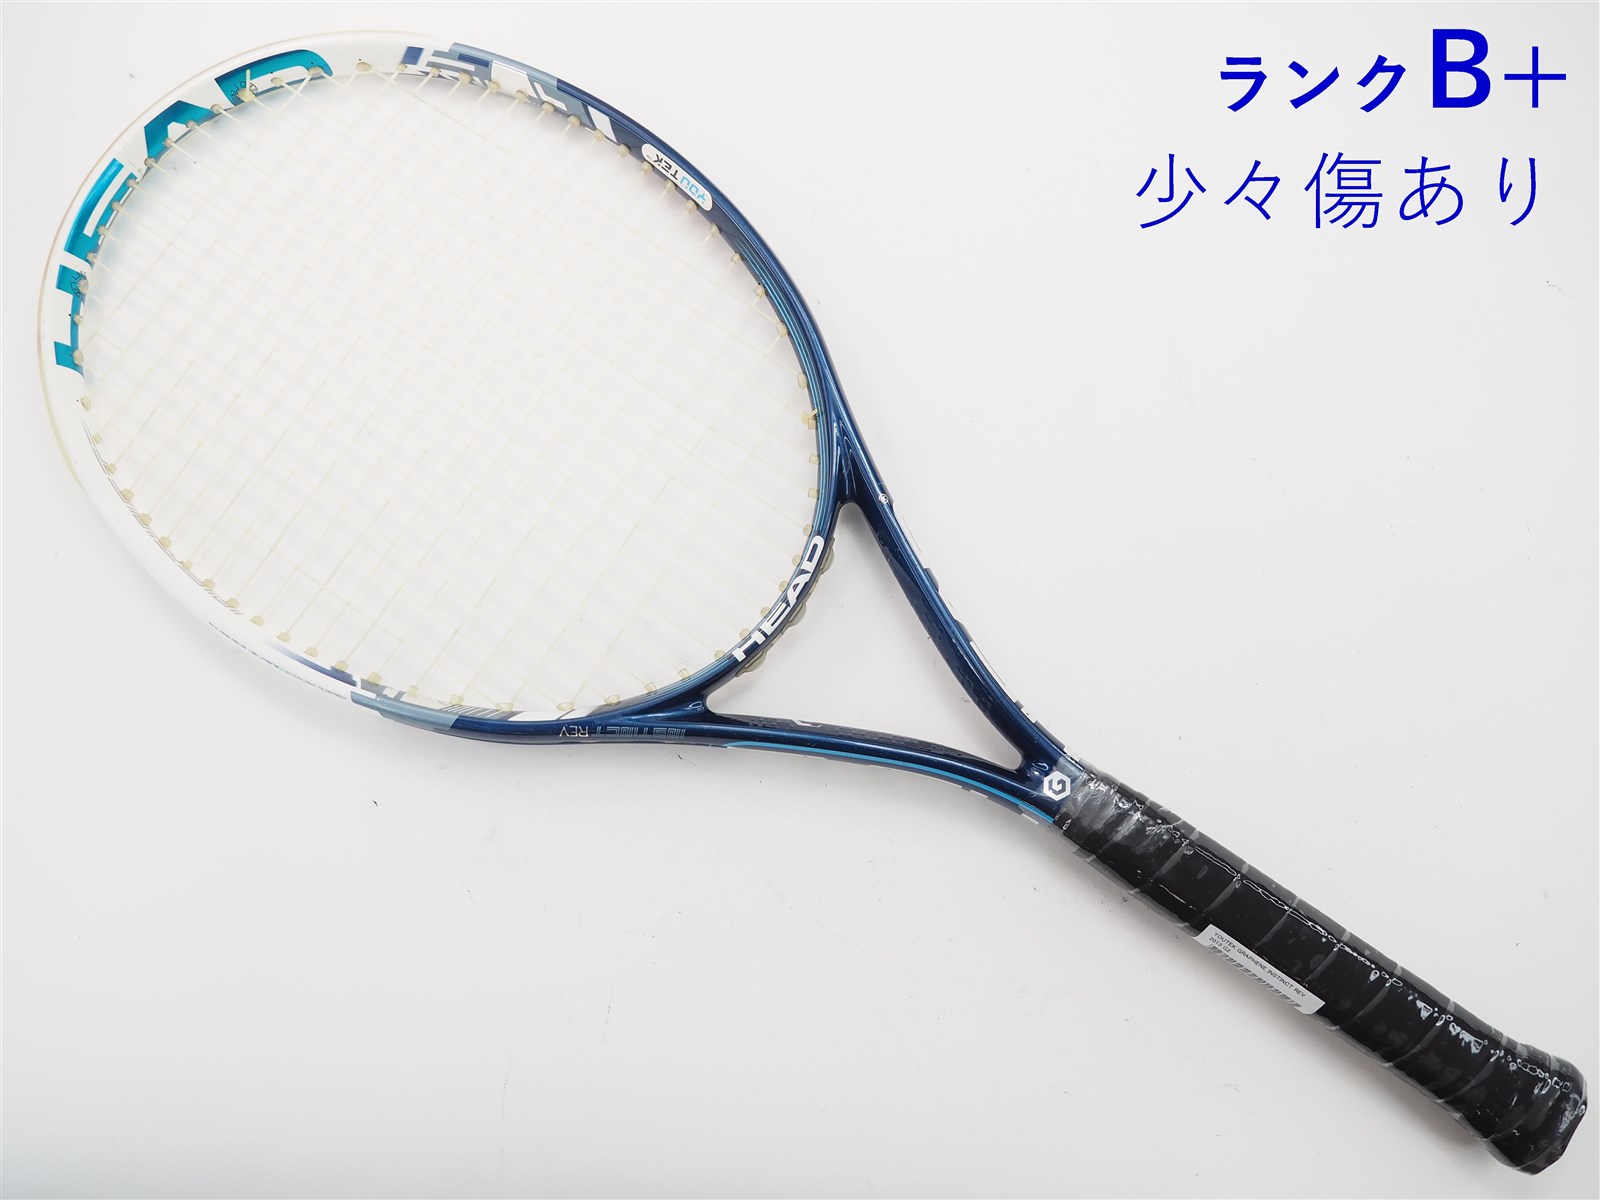 HEAD YOUTEK GRAPHENE SPEED S 硬式テニスラケット - ラケット(硬式用)